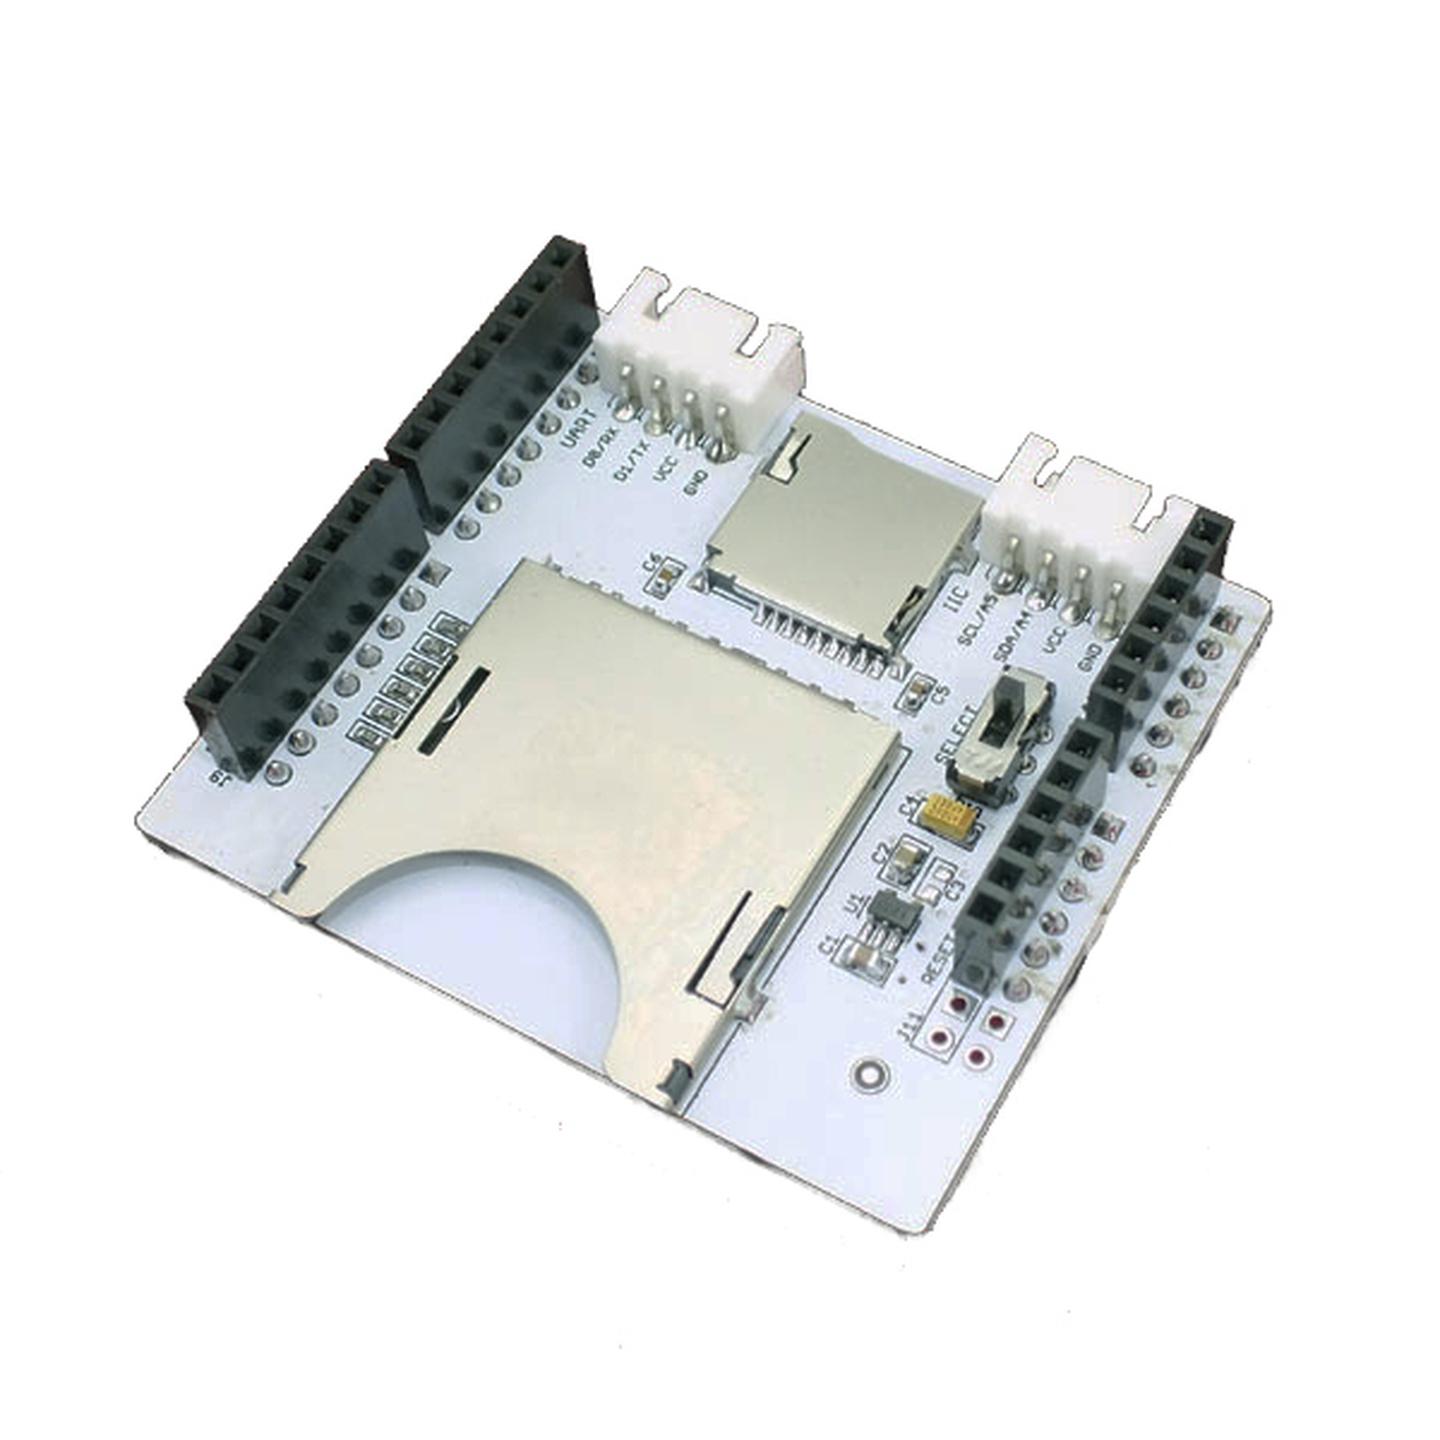 SD Card Shield for Arduino